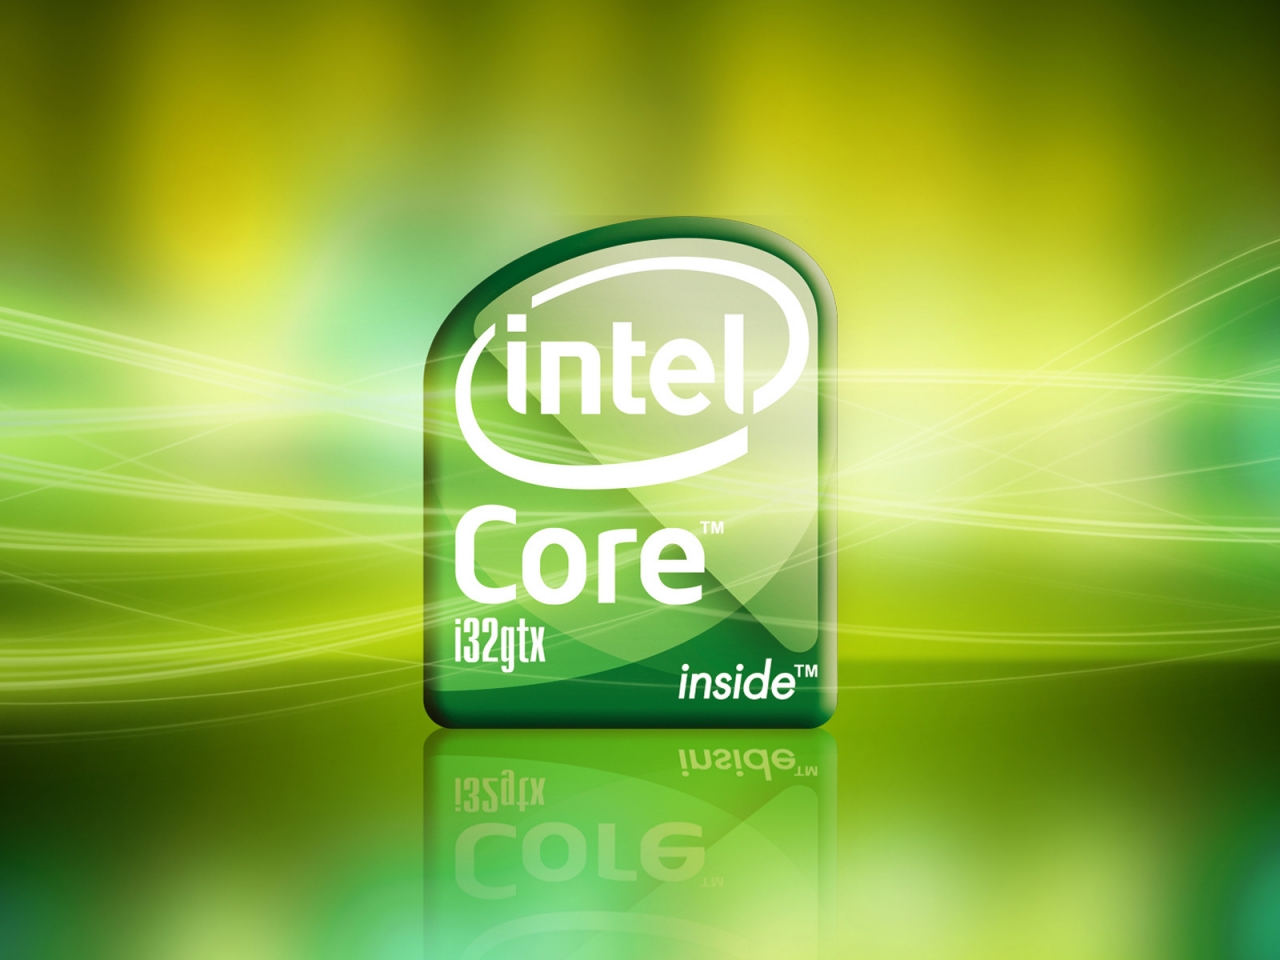 Intel Core i32gtx for 1280 x 960 resolution